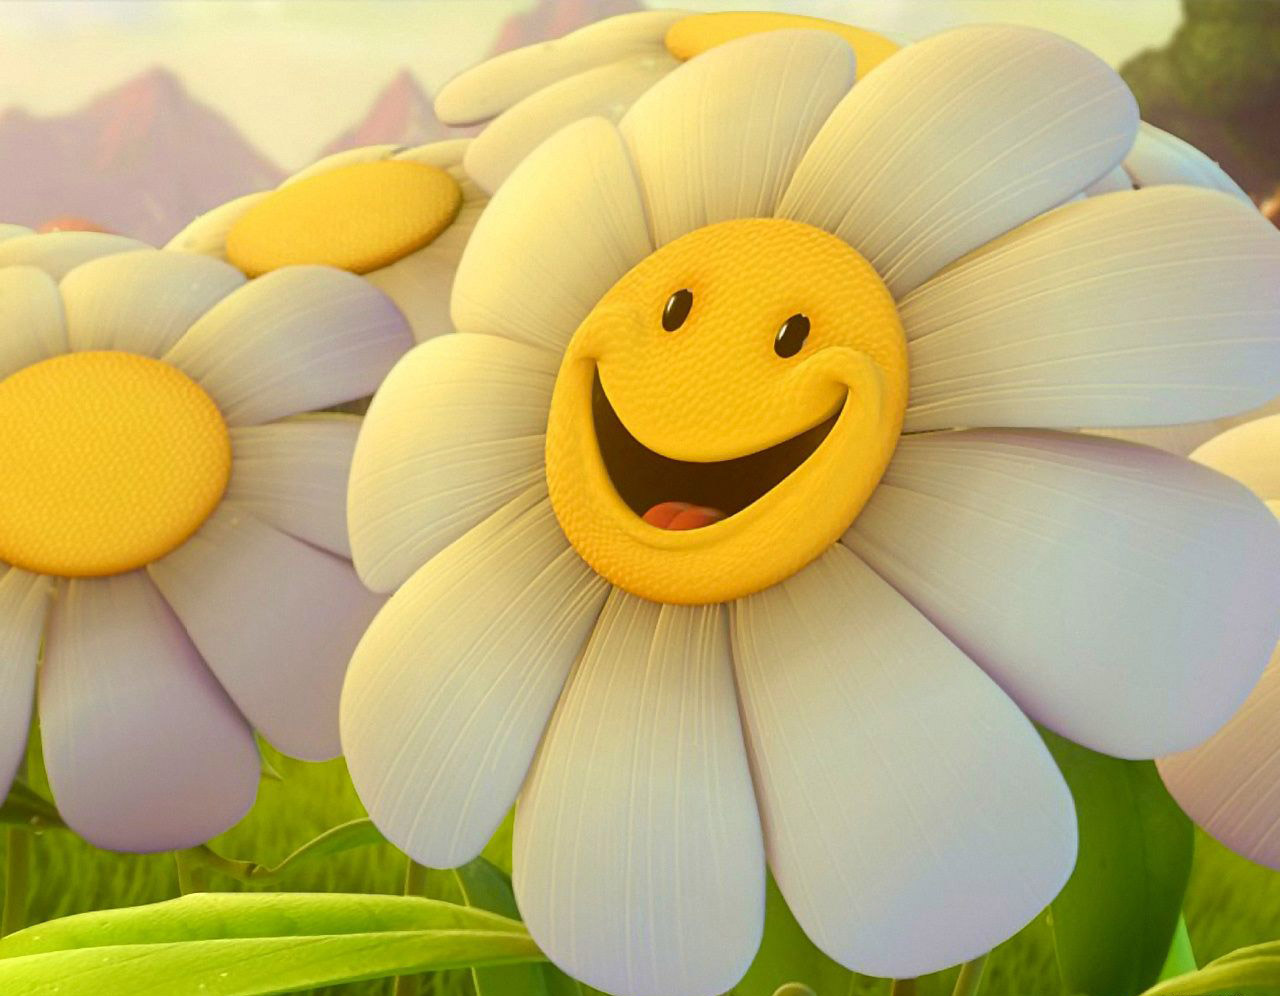 https://blogger.googleusercontent.com/img/b/R29vZ2xl/AVvXsEhLiCnftHFupMcnbKrU1MHZvcYOCNljqgagQqOktEzIFiSddGx9F9vfFAi7jBiojxcnDVmXSOdOMo25zfufBa44UOaxcFGfrFL7X6NJyMcBSDJVuuGIw6DVNSJchyPGc1eYXfQCa3etO7SA/s1600/Smiley_Flower_Happy%2521_wallpaper.jpg